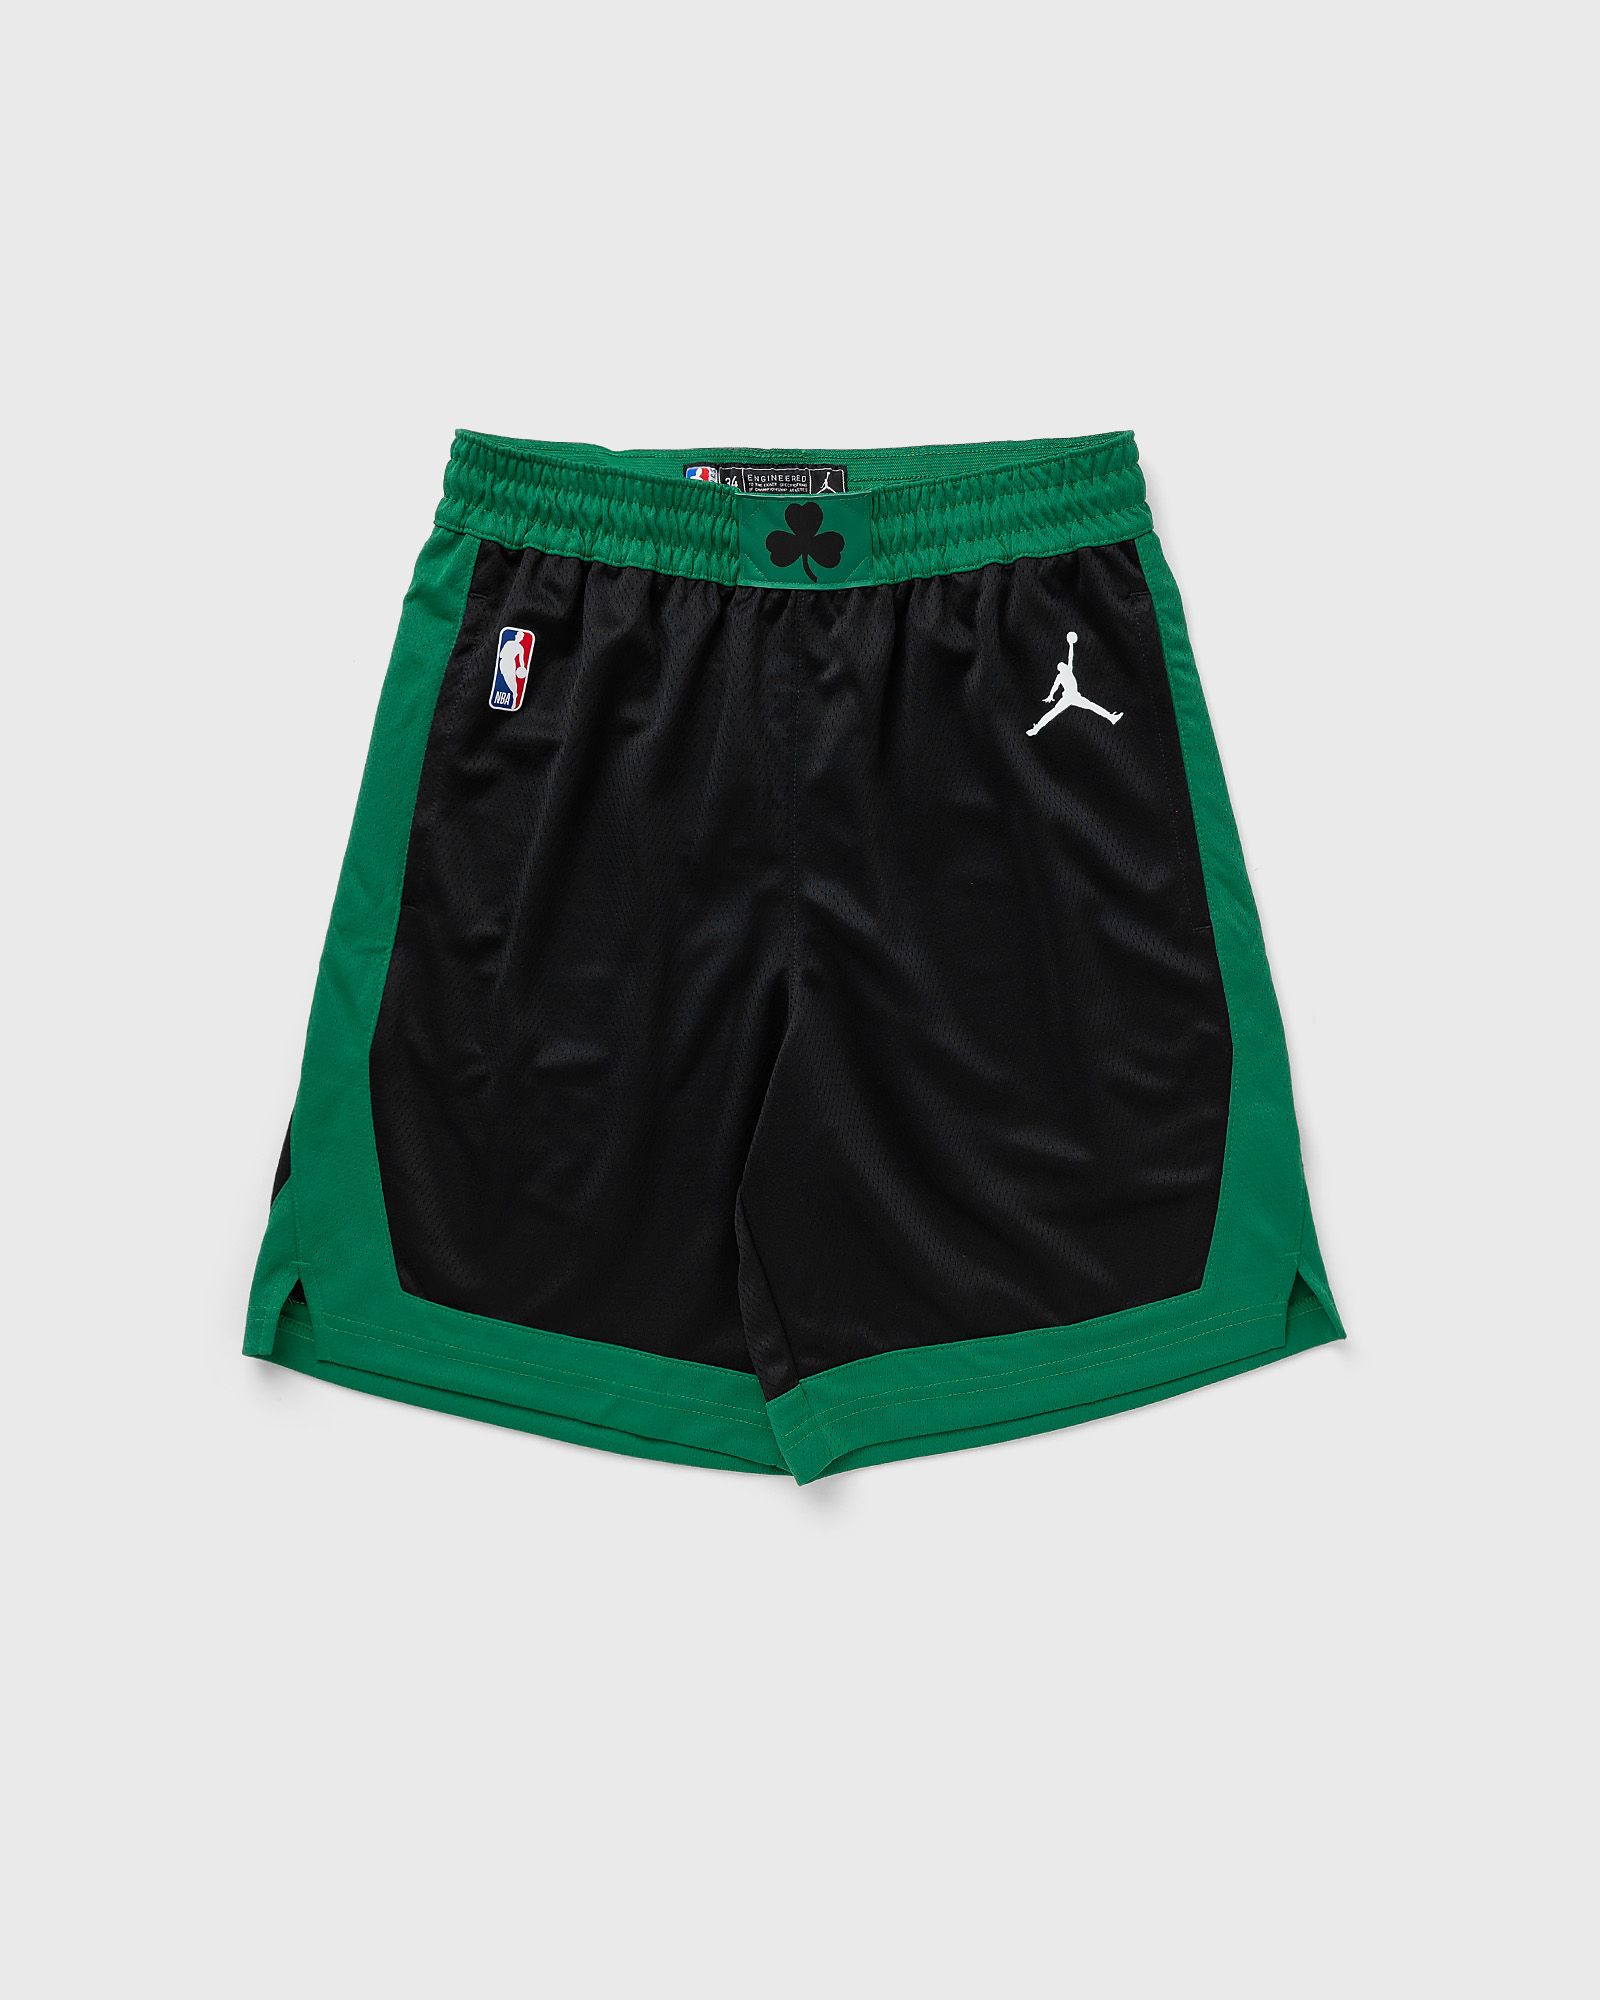 Nike - boston celtics statement edition men's jordan dri-fit nba swingman basketball shorts men sport & team shorts black|green in größe:m